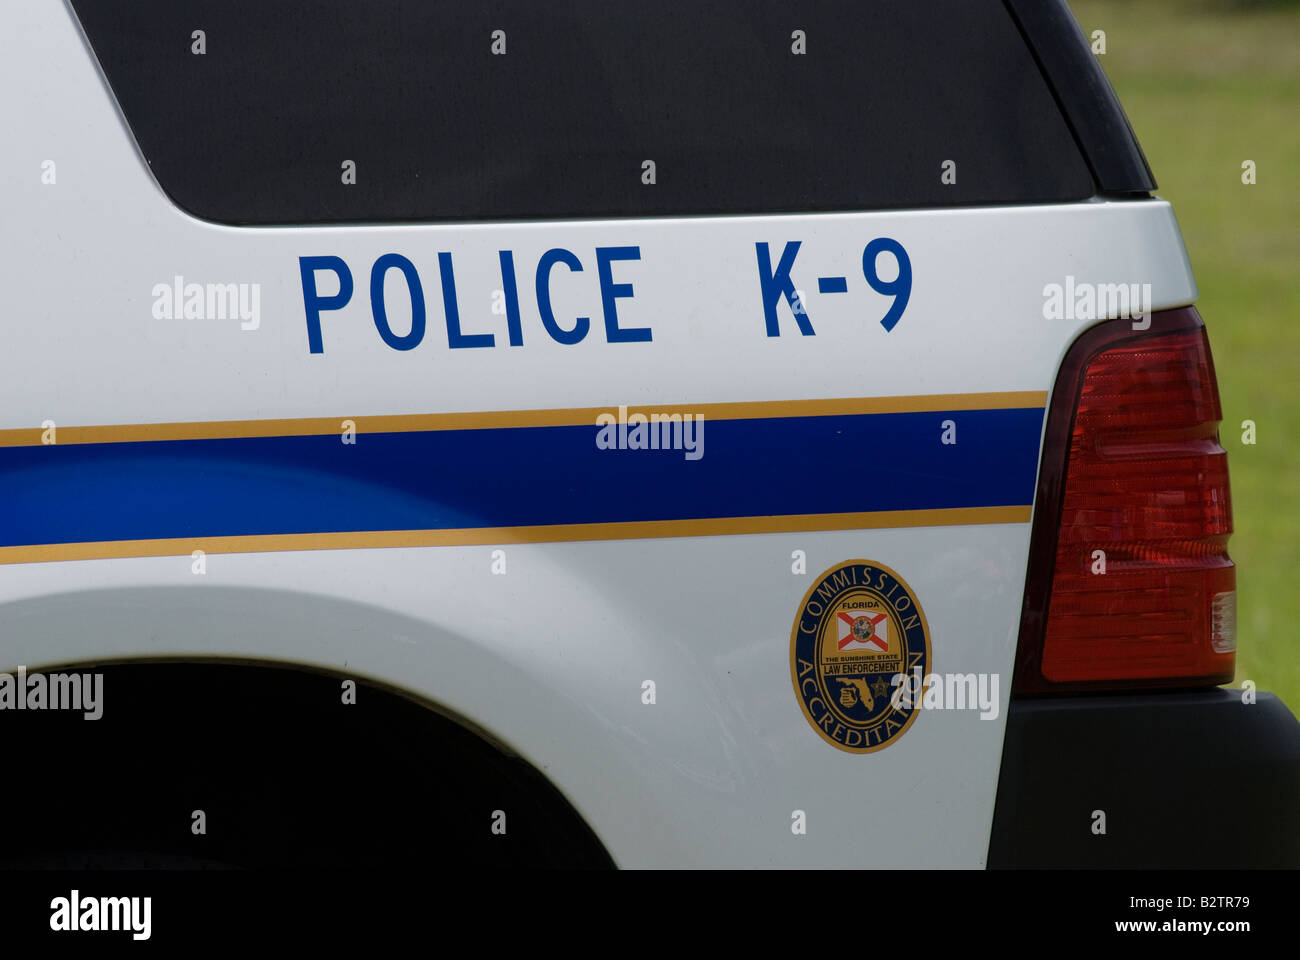 K 9 vehículo policial en manifestación en feria de Gainesville, Florida Foto de stock